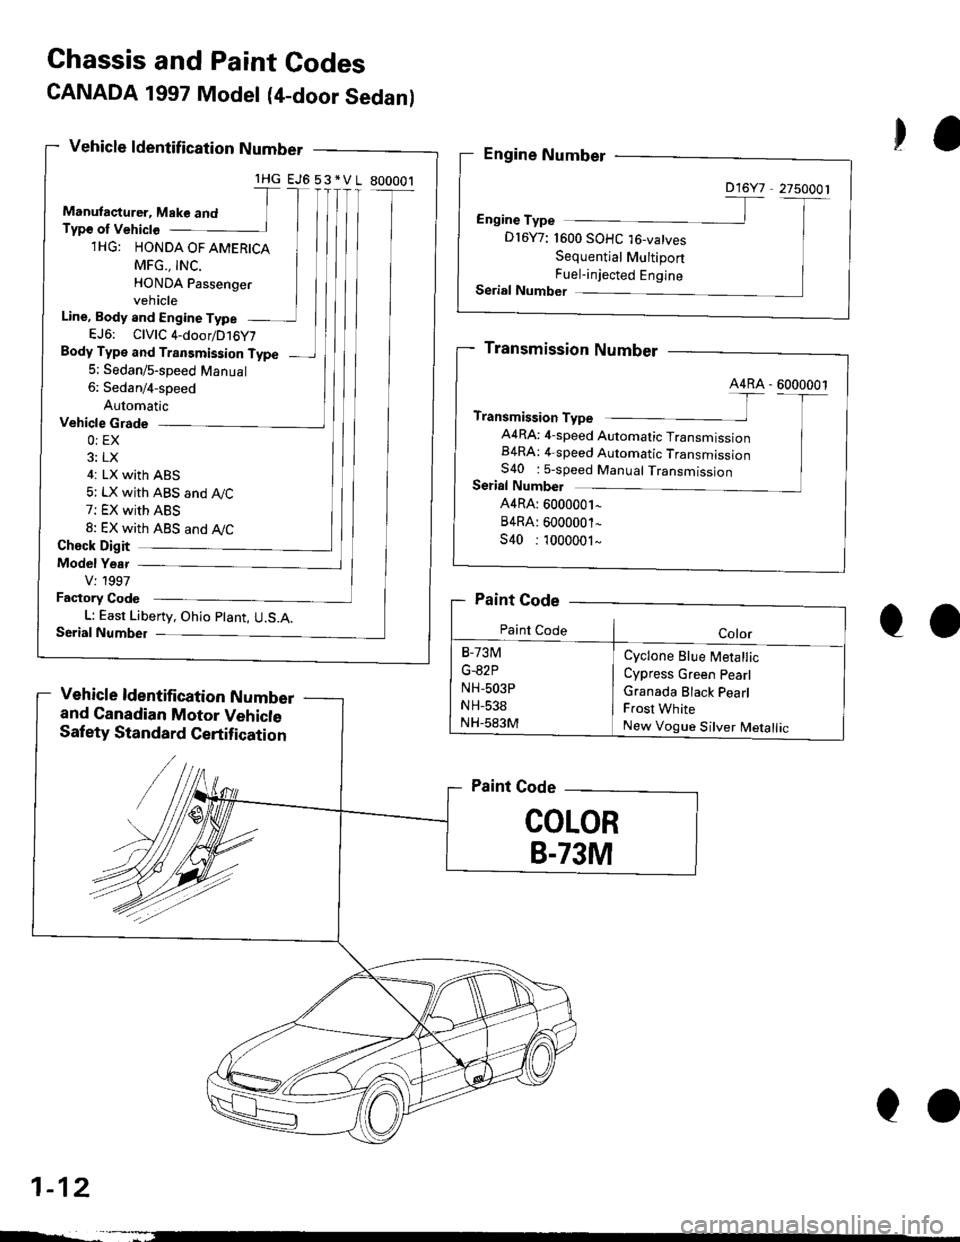 HONDA CIVIC 1997 6.G Workshop Manual Chassis and Paint Godes
CANADA 1997 Modet (4-door Sedan)
Vehicle ldentification Number
and Canadian Motor Vehicle
Safety Standard Certification
1-12
]l
00
Paint Code
COLOR
B.73M
ea
lHG EJ6 53 *V L 800